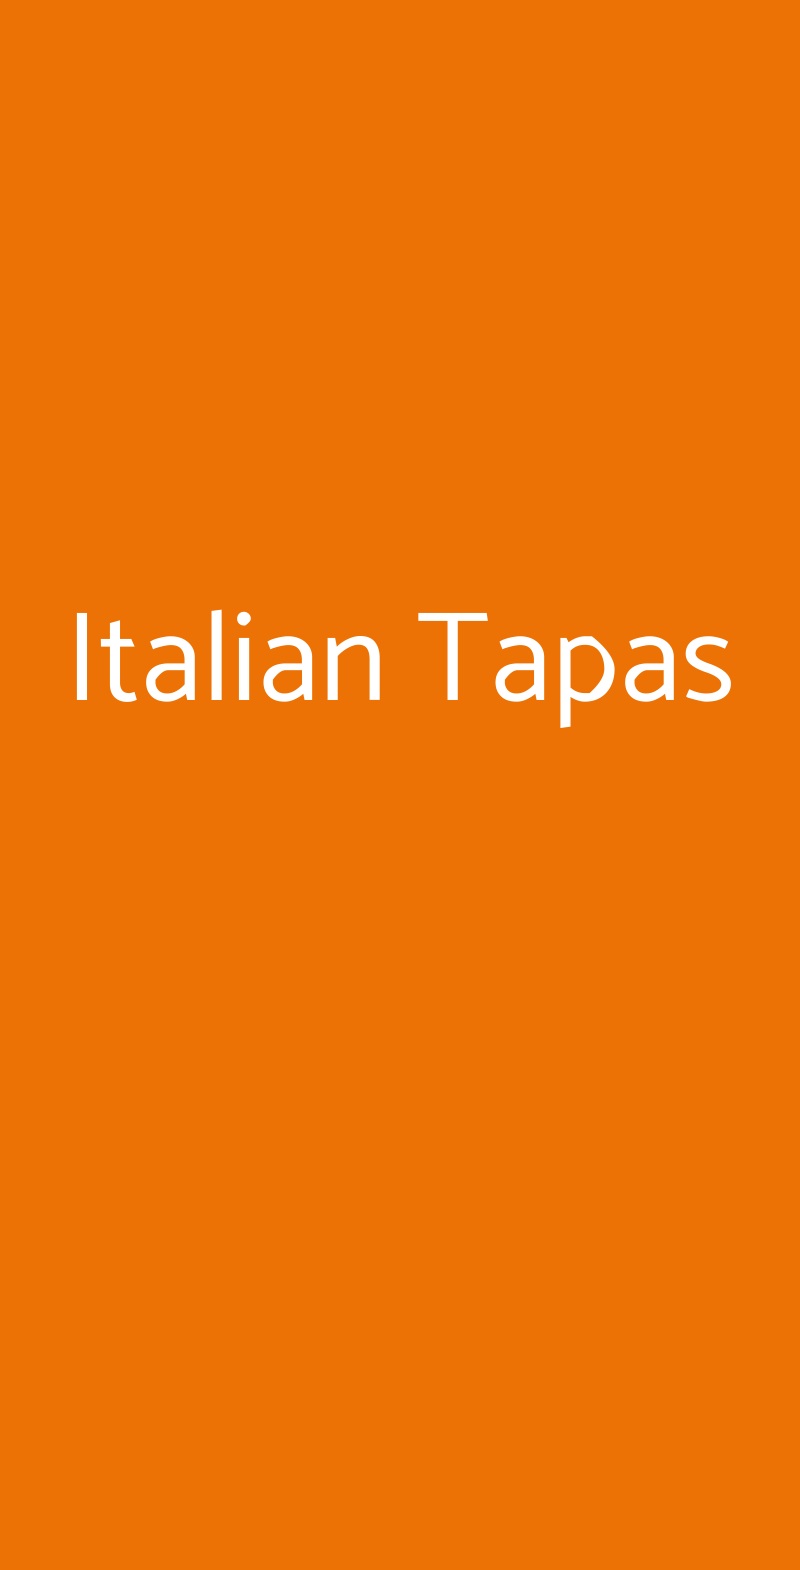 Italian Tapas Firenze menù 1 pagina